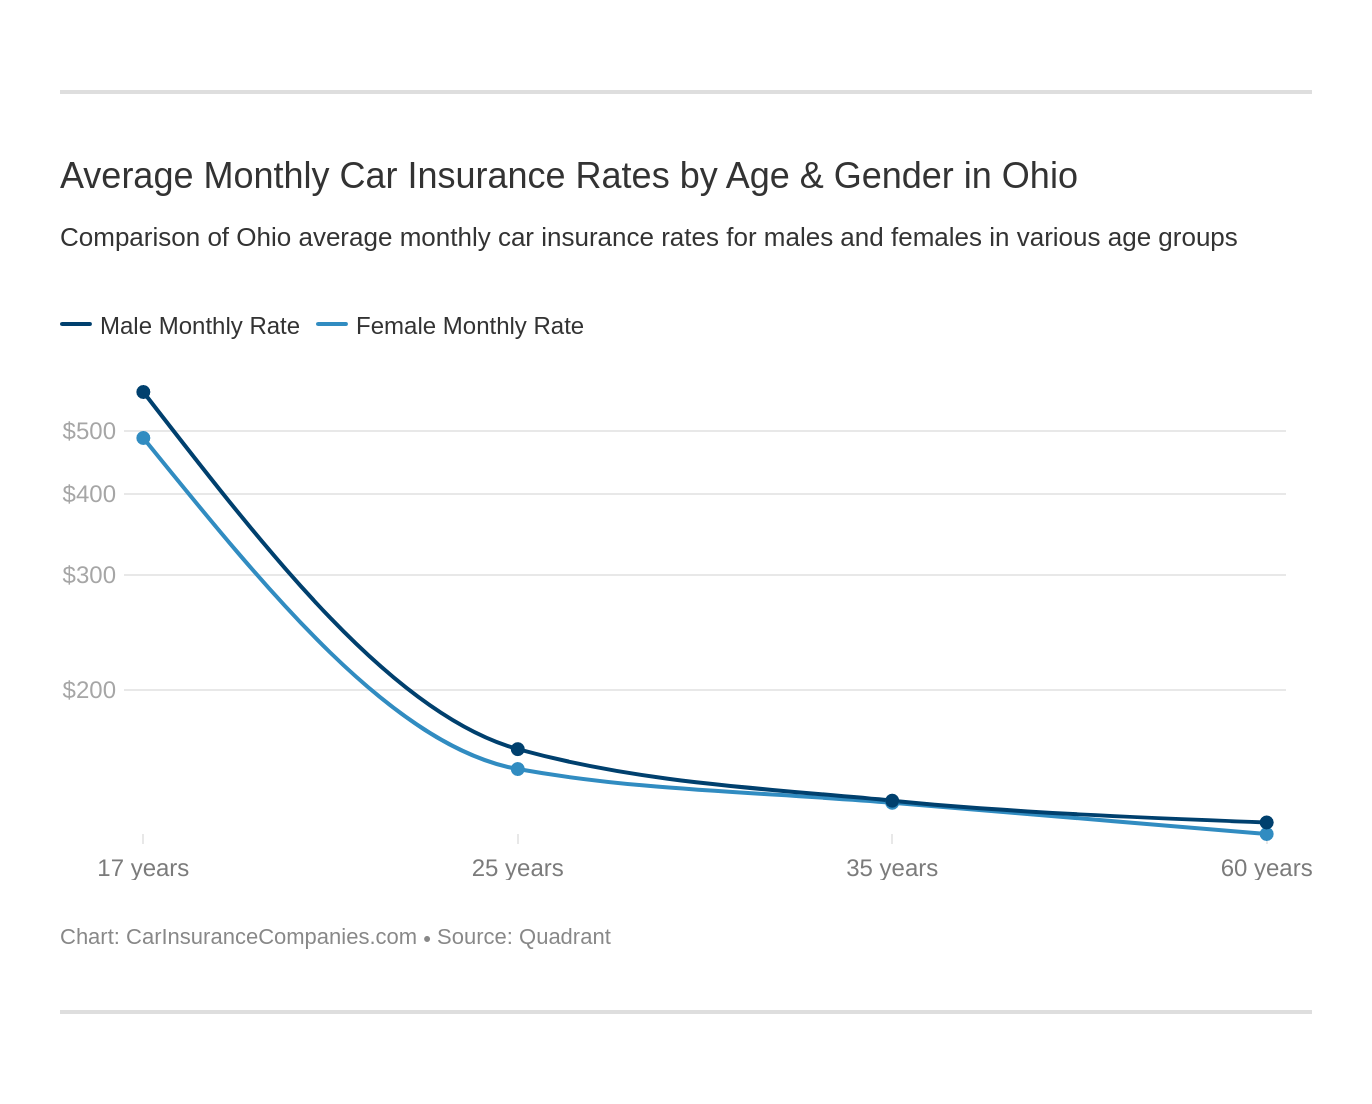 Ohio Car Insurance (Coverage, Companies, & More)